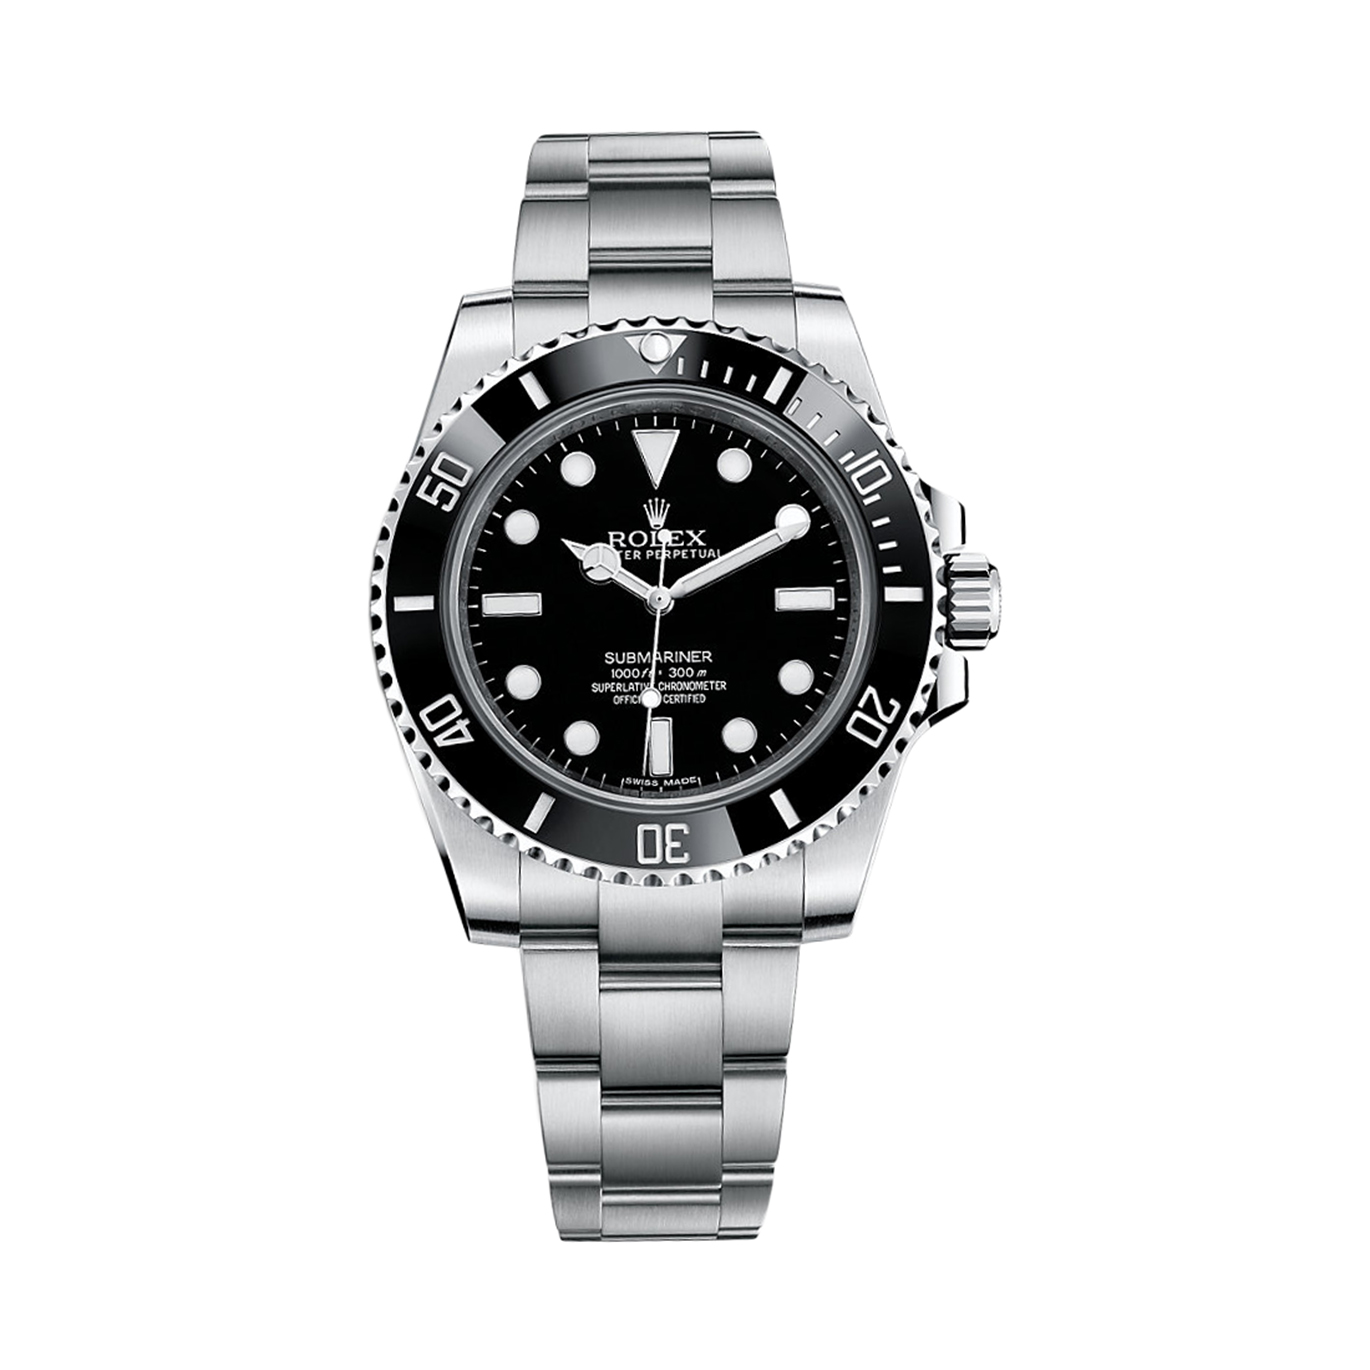 Submariner 114060 Stainless Steel Watch (Black)